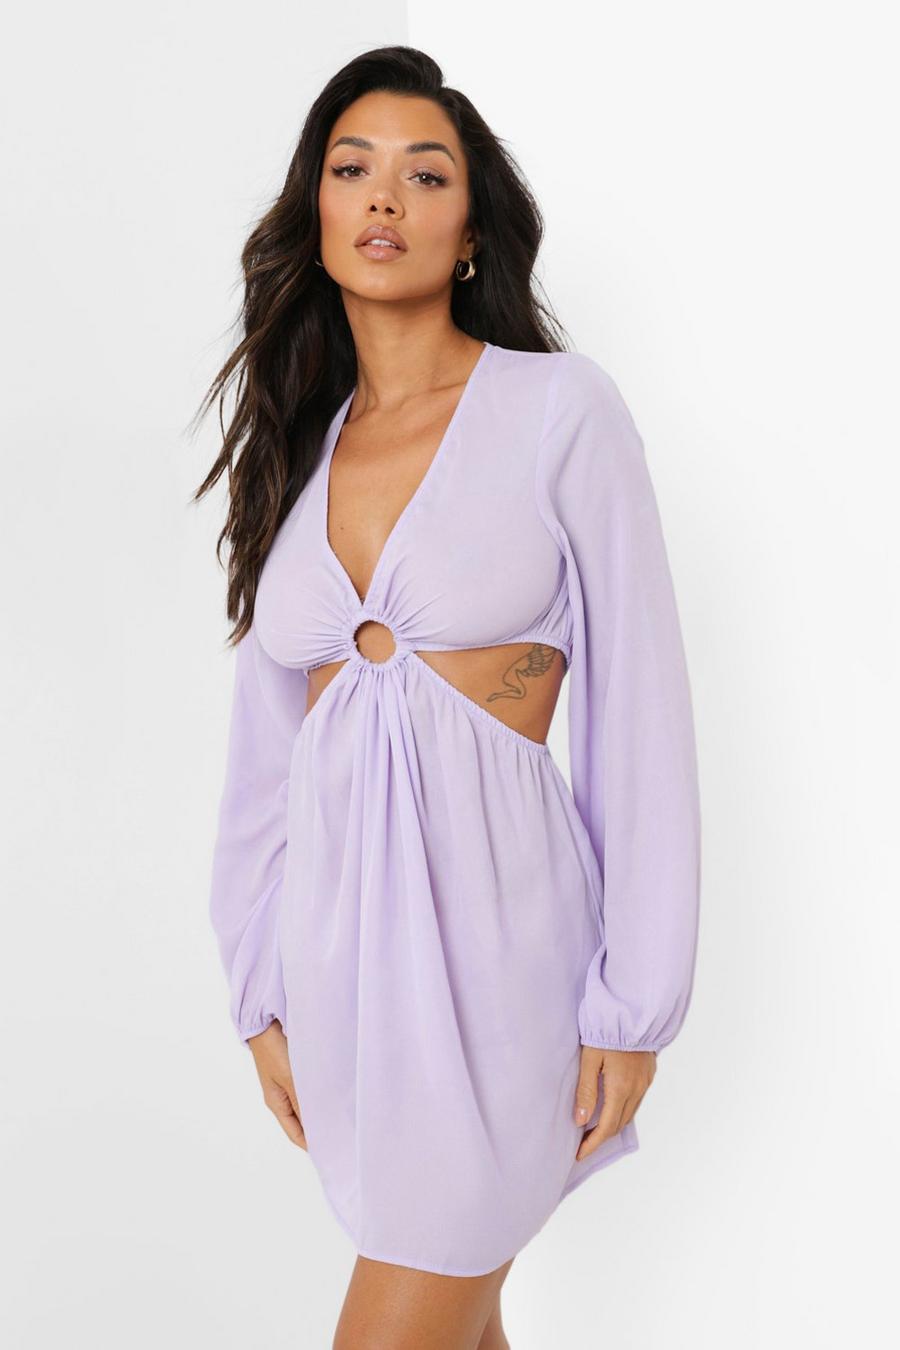 Lilac purple Chiffon O-ring Detail Cut Out Beach Dress